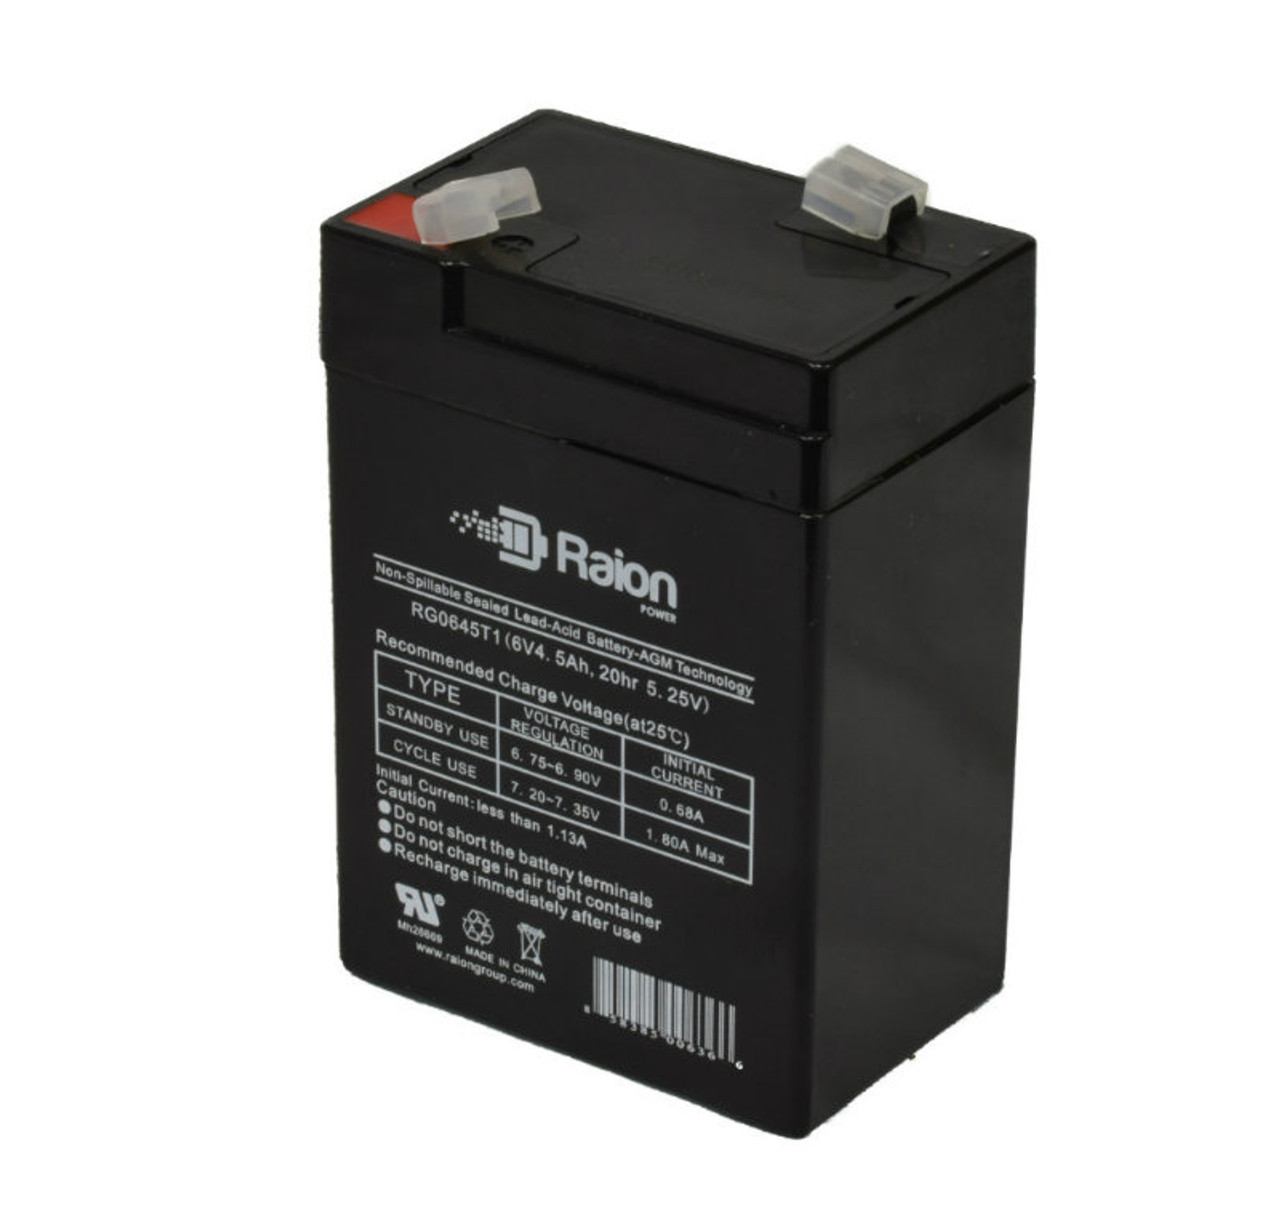 Raion Power RG0645T1 6V 4.5Ah Replacement Battery Cartridge for Teledyne Big Beam ET6S5